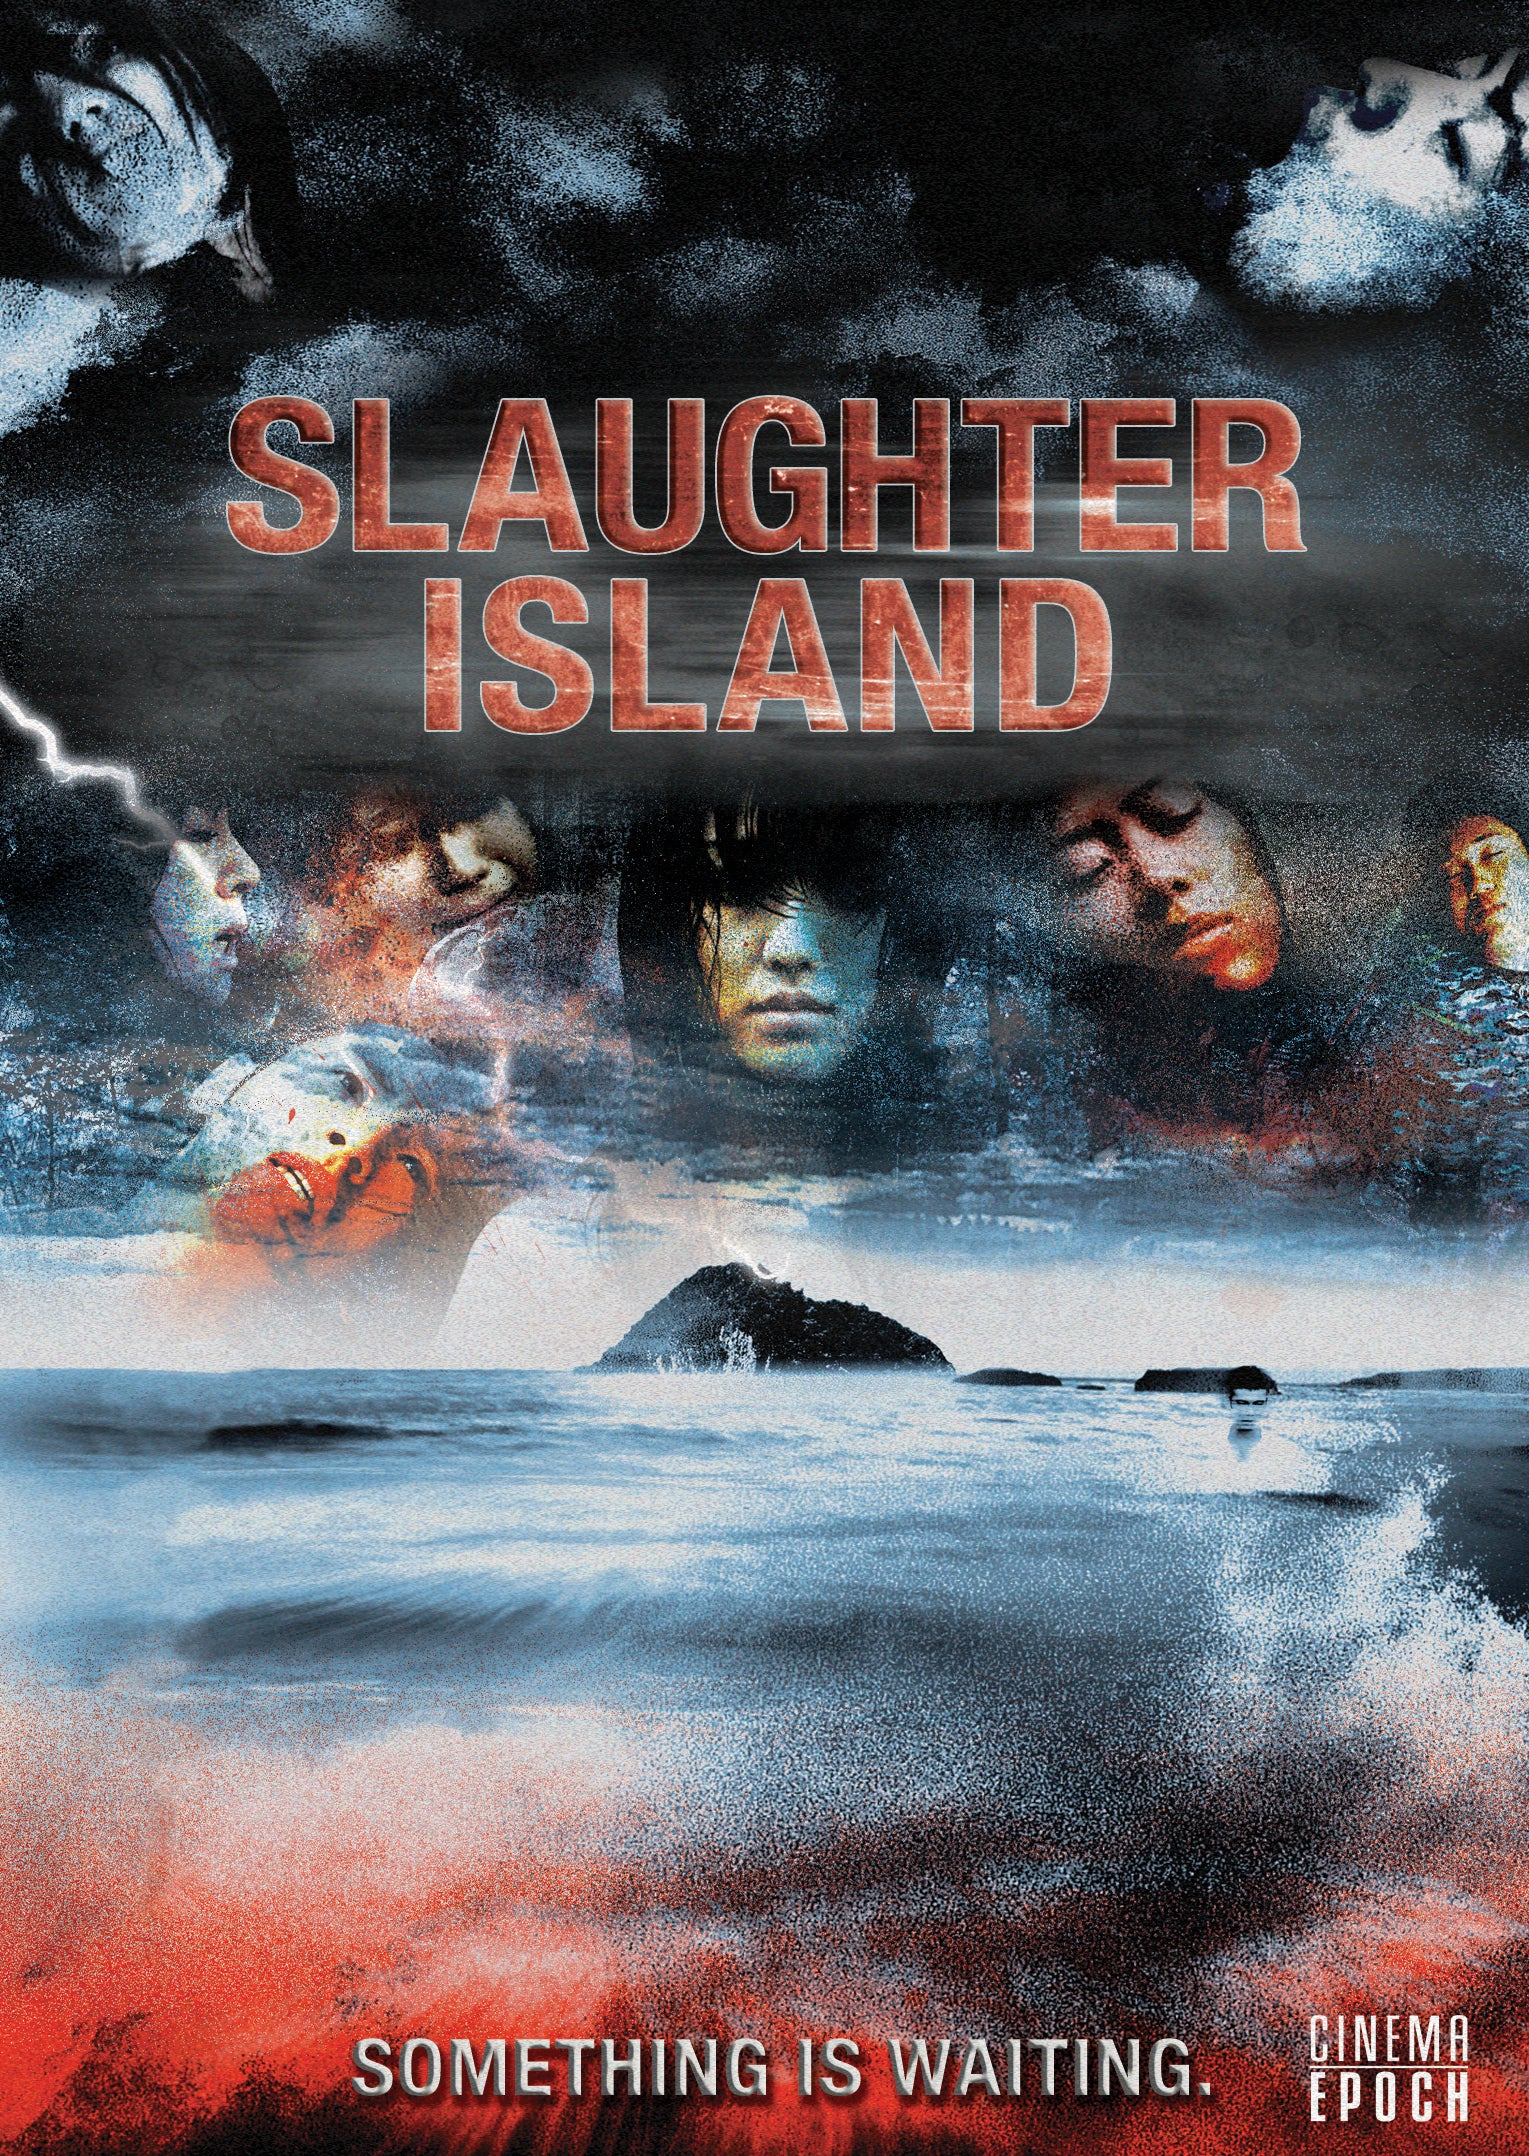 SLAUGHTER ISLAND DVD